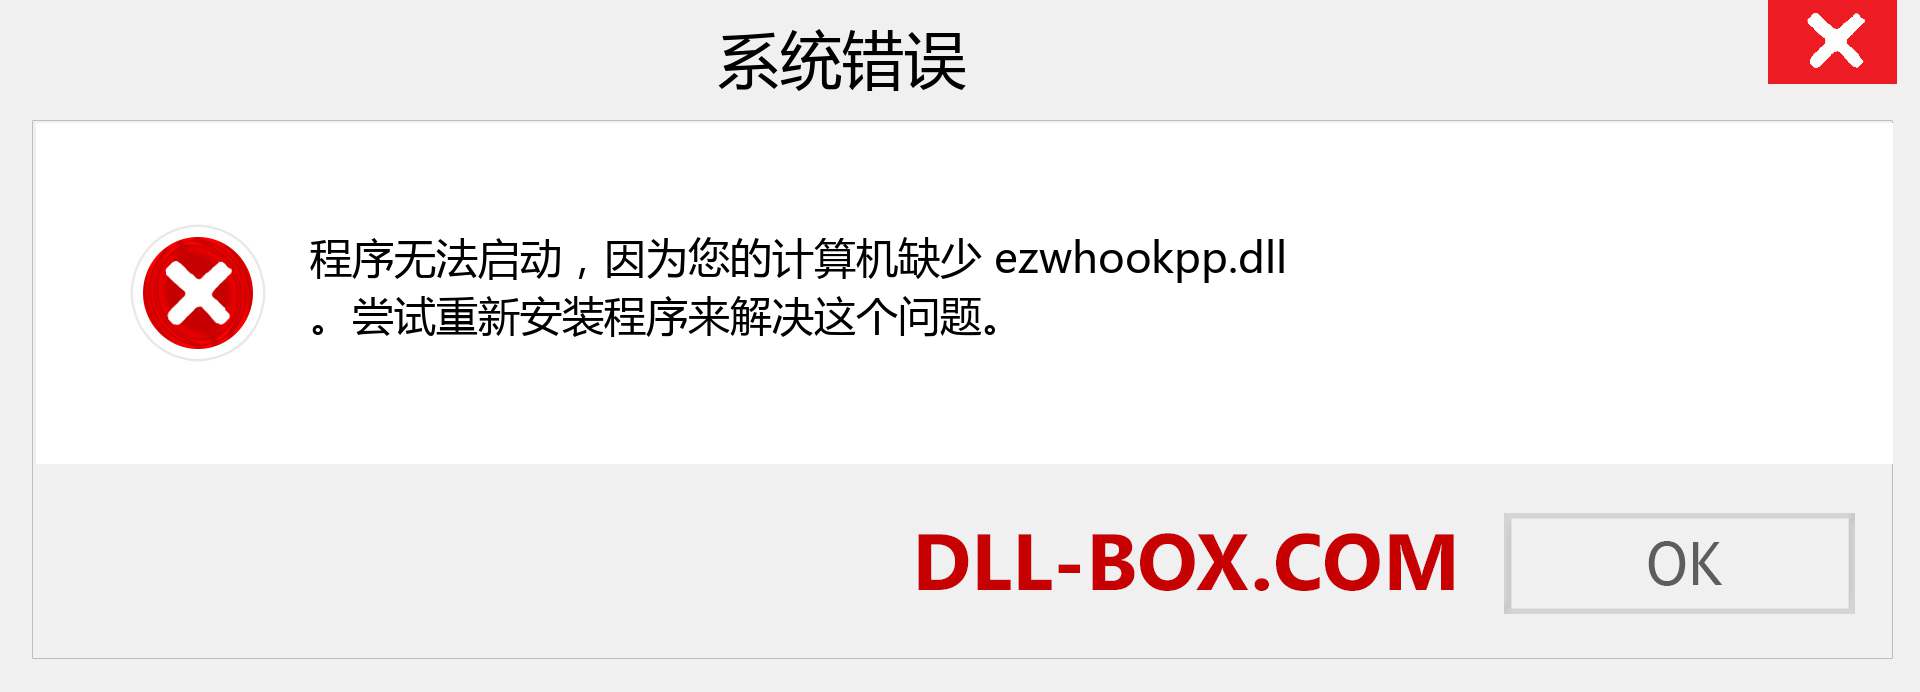 ezwhookpp.dll 文件丢失？。 适用于 Windows 7、8、10 的下载 - 修复 Windows、照片、图像上的 ezwhookpp dll 丢失错误